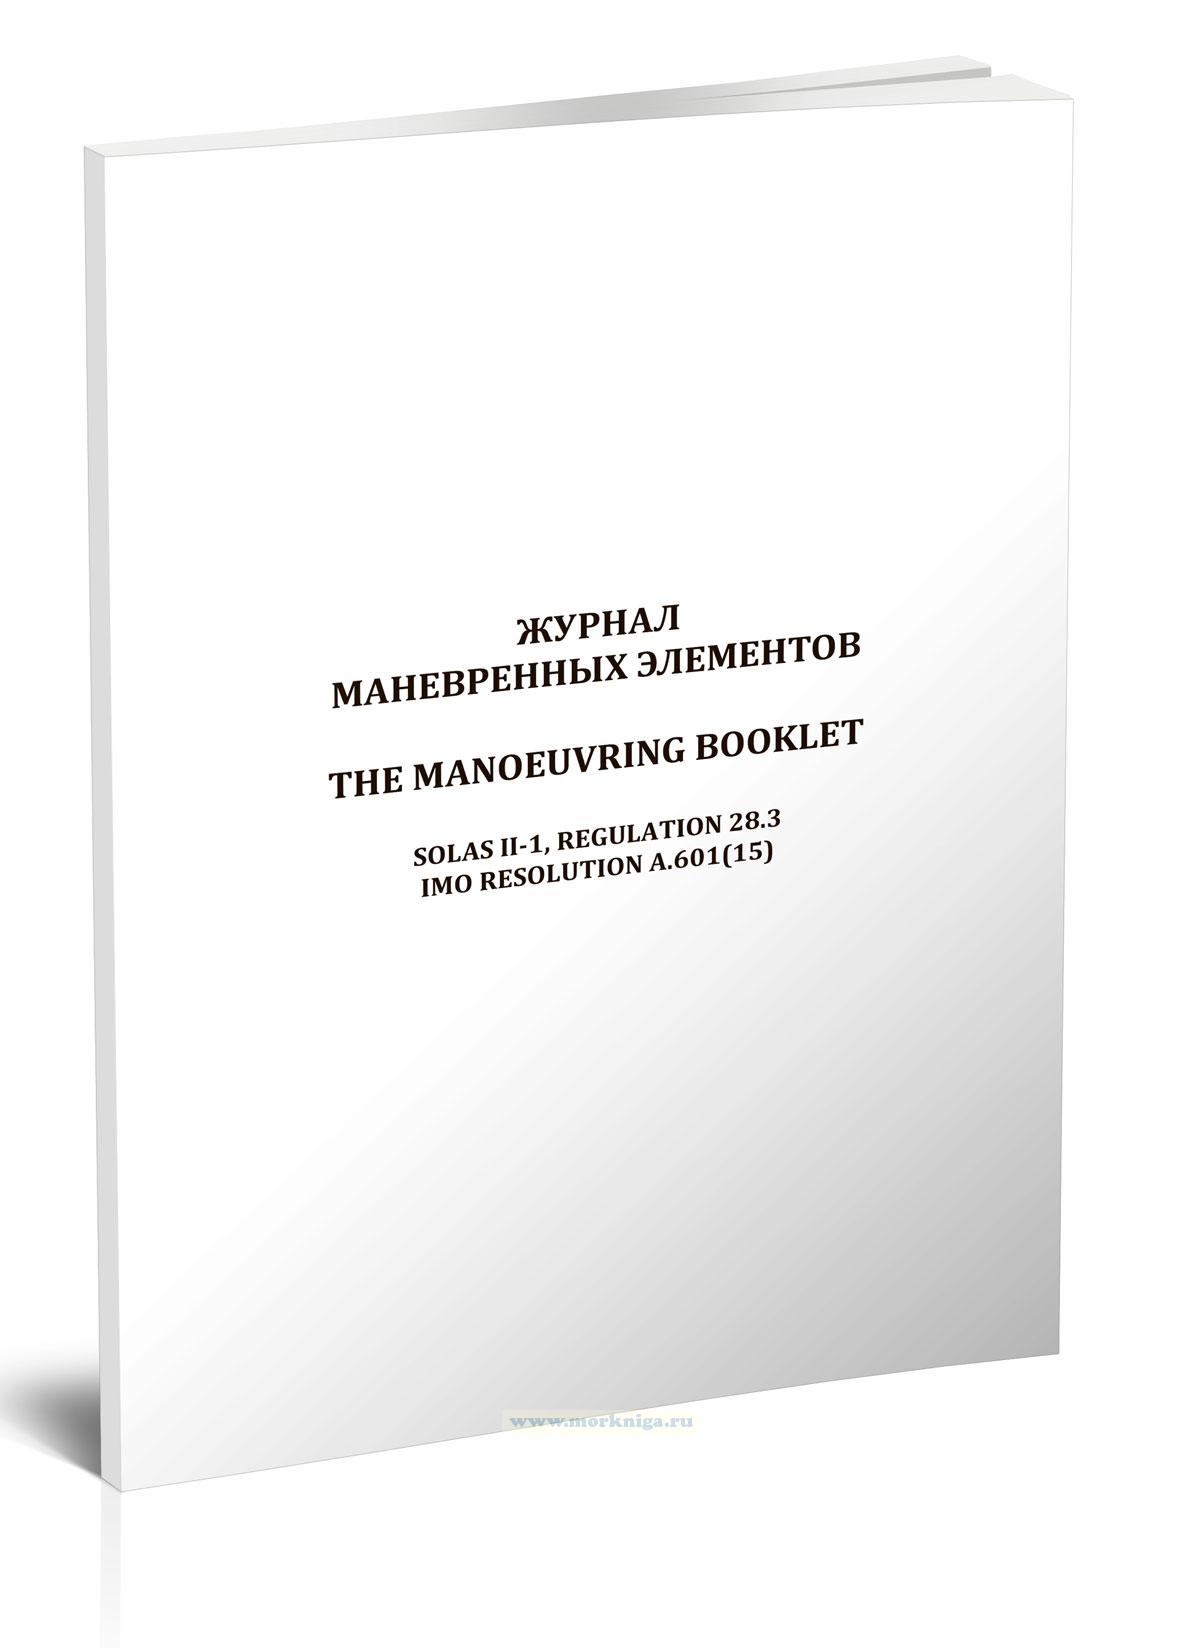 Manoeuvring Booklet/Журнала маневренных элементов